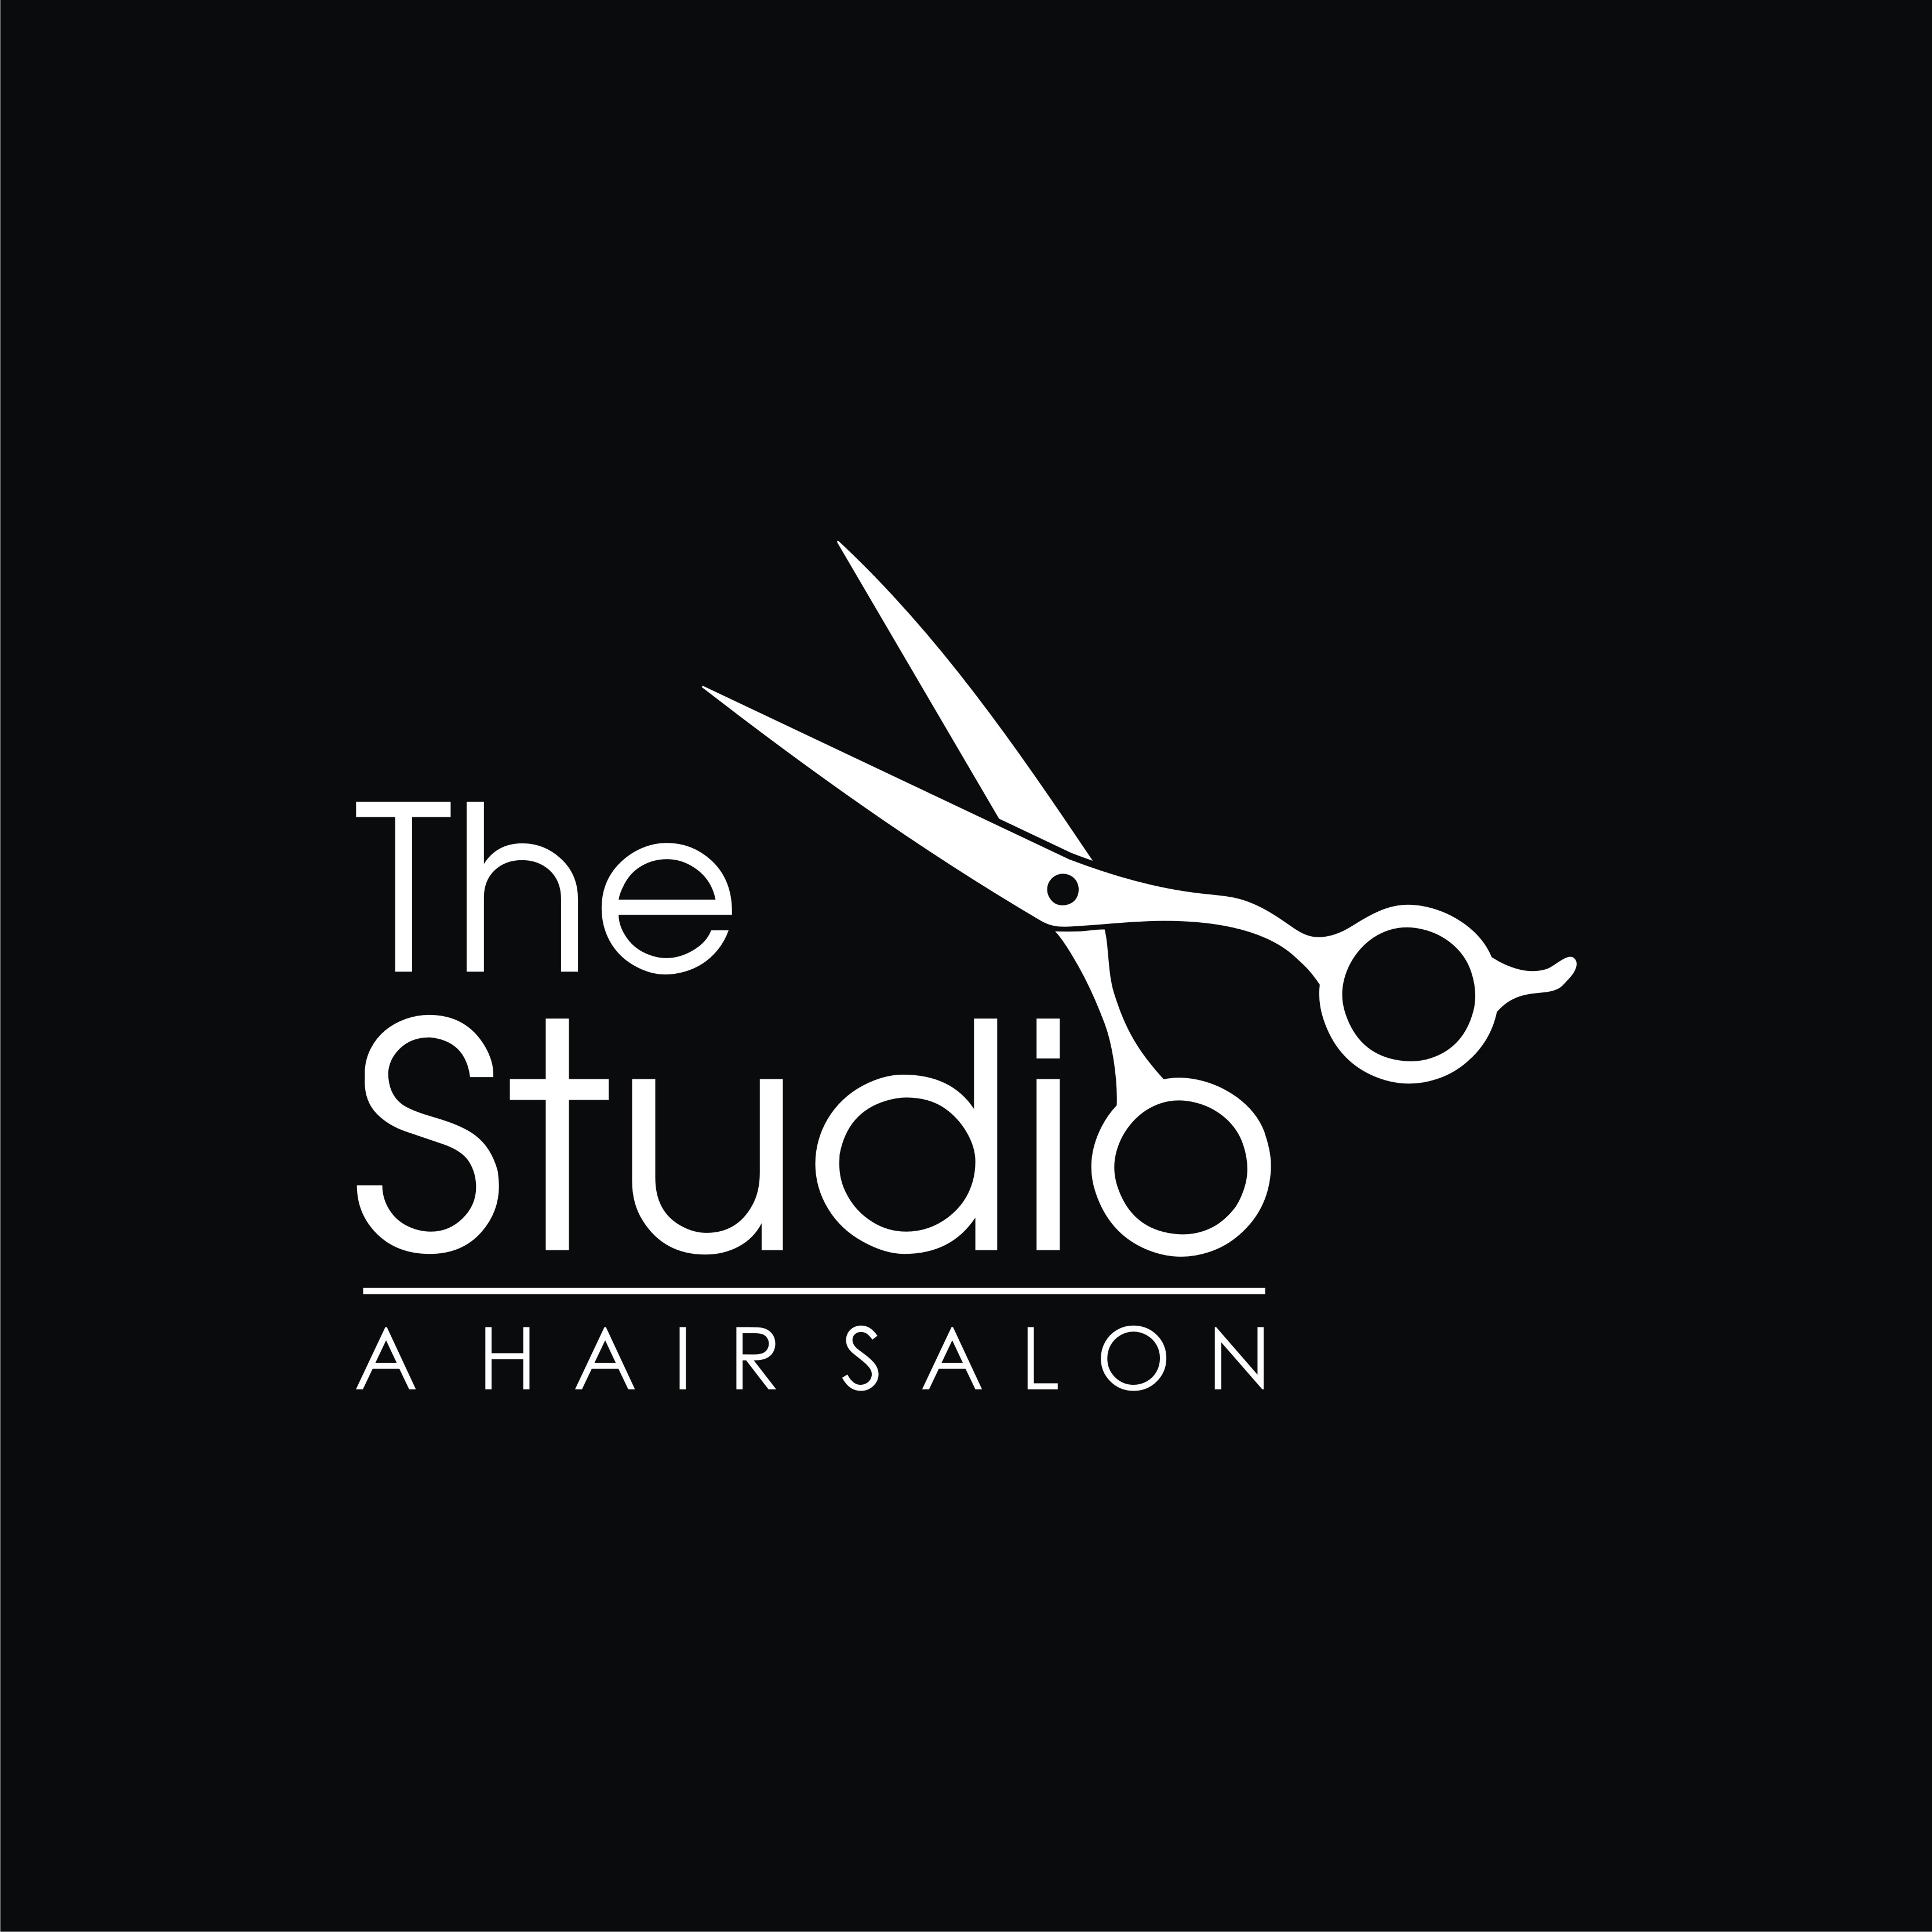 The Studio: A Hair Salon logo